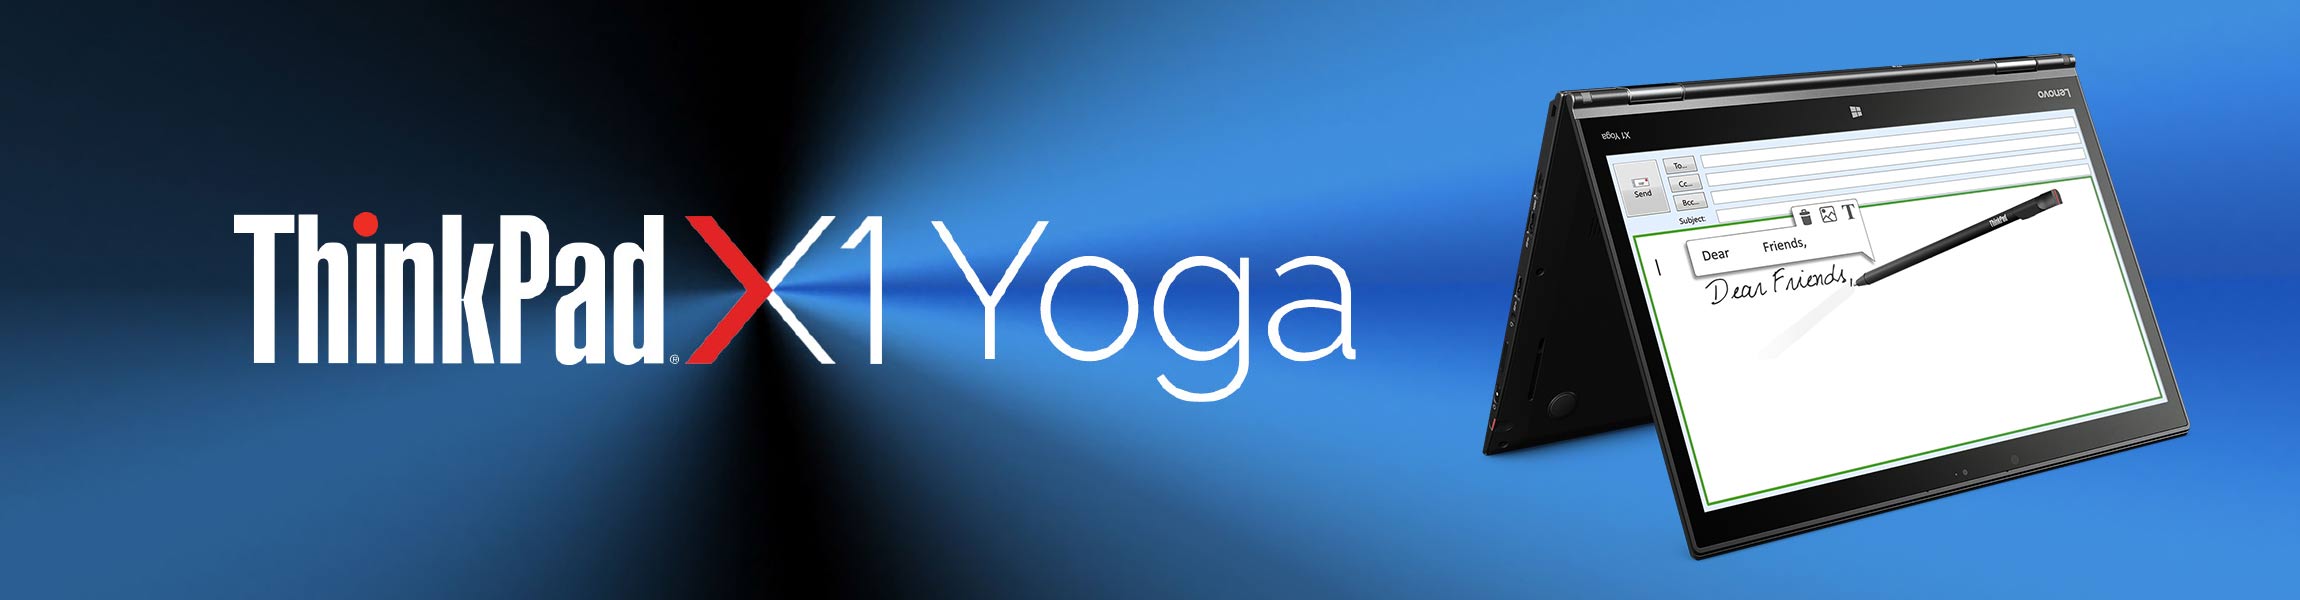 x1-yoga_2